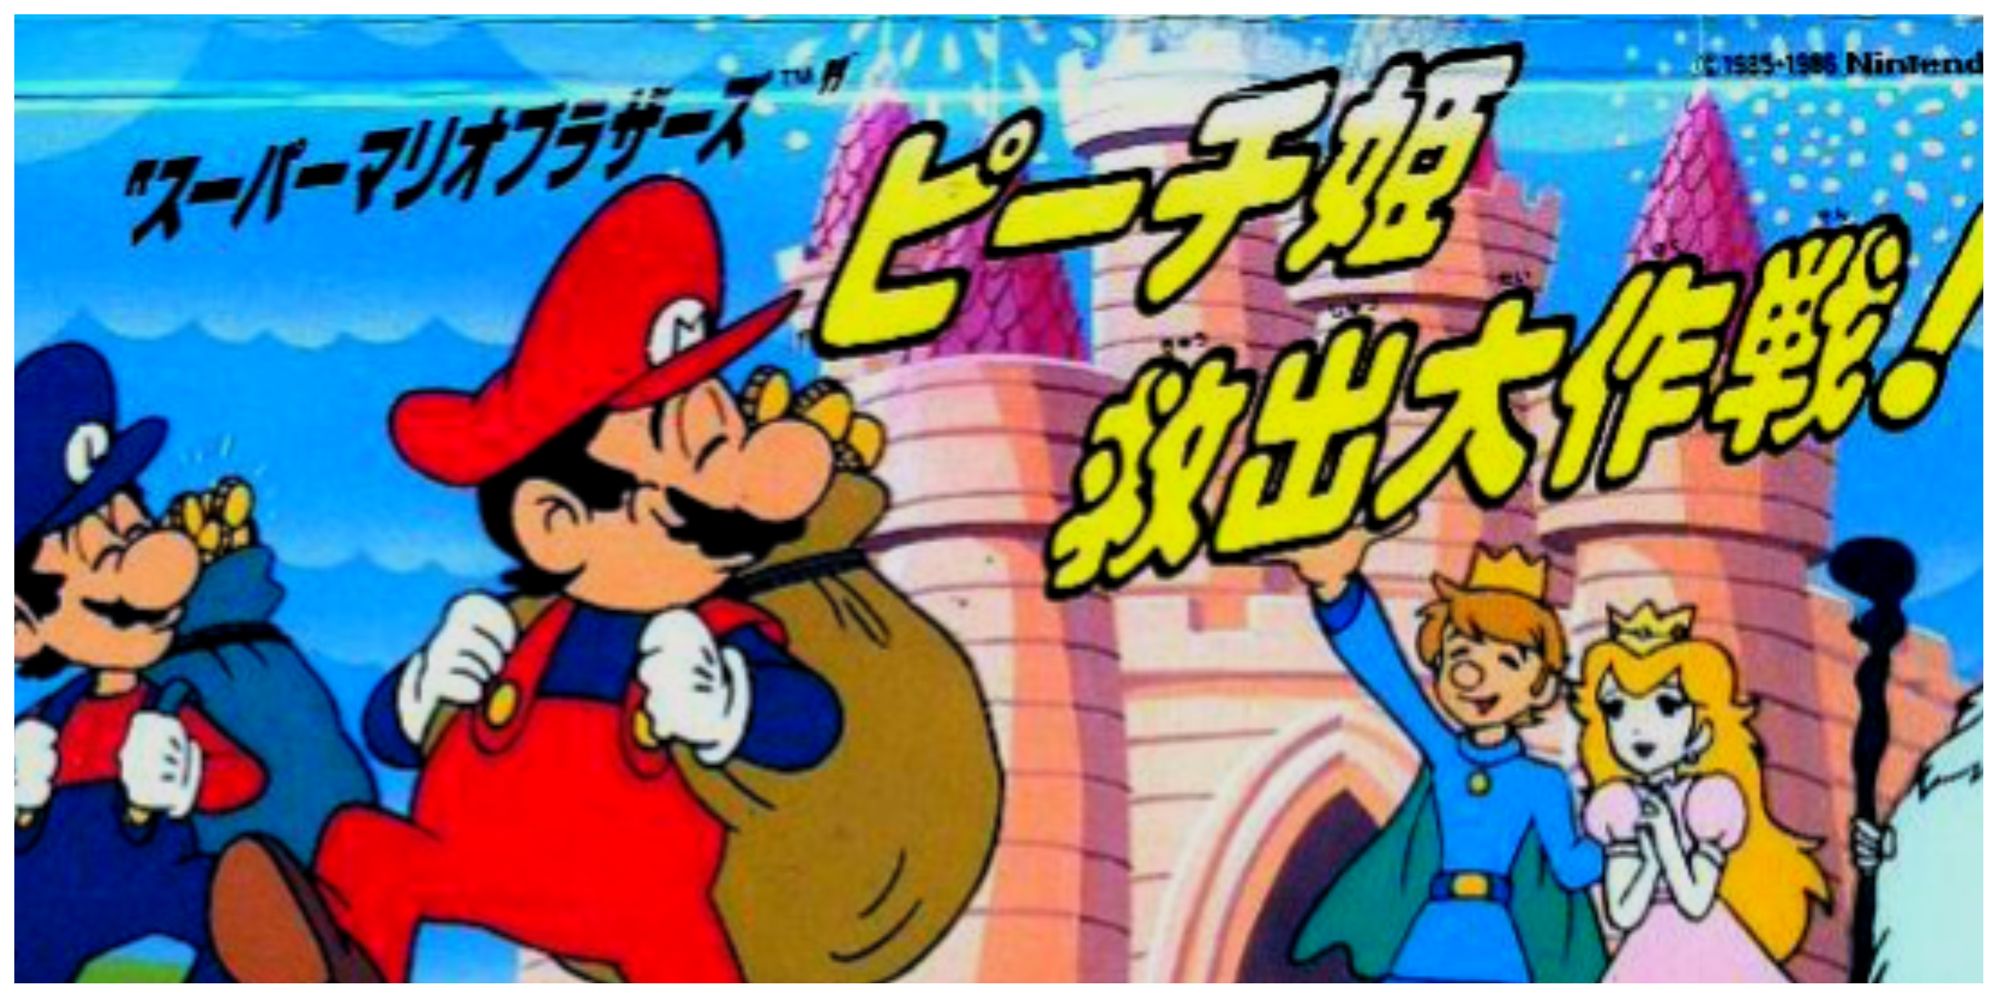 Mario, Luigi, and Princess Peach in Super Mario Bros. Peach-Hime 